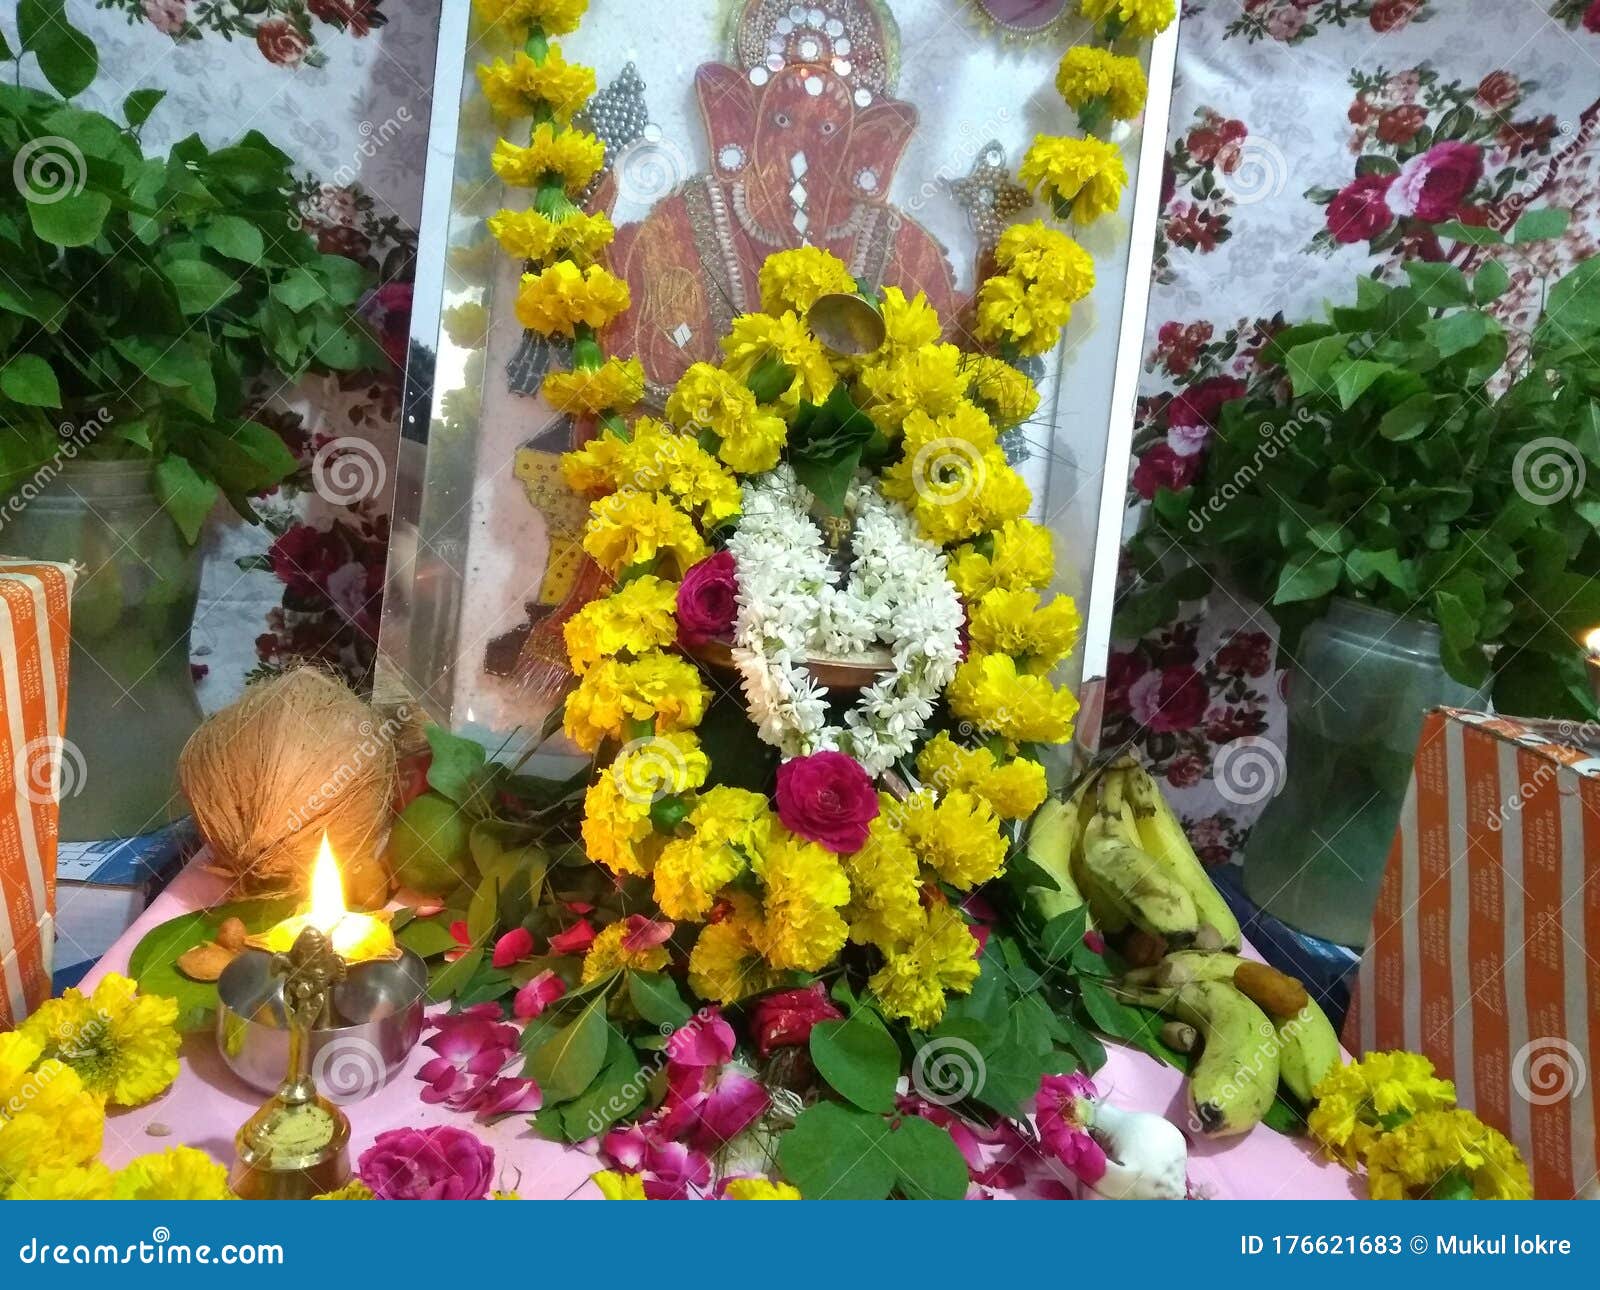 Follow @divyaprathee1 Krishna Kamal or Mahabharata Flower Garland for god/passion  flower mala for god/Ganesha special mala For more… | Instagram